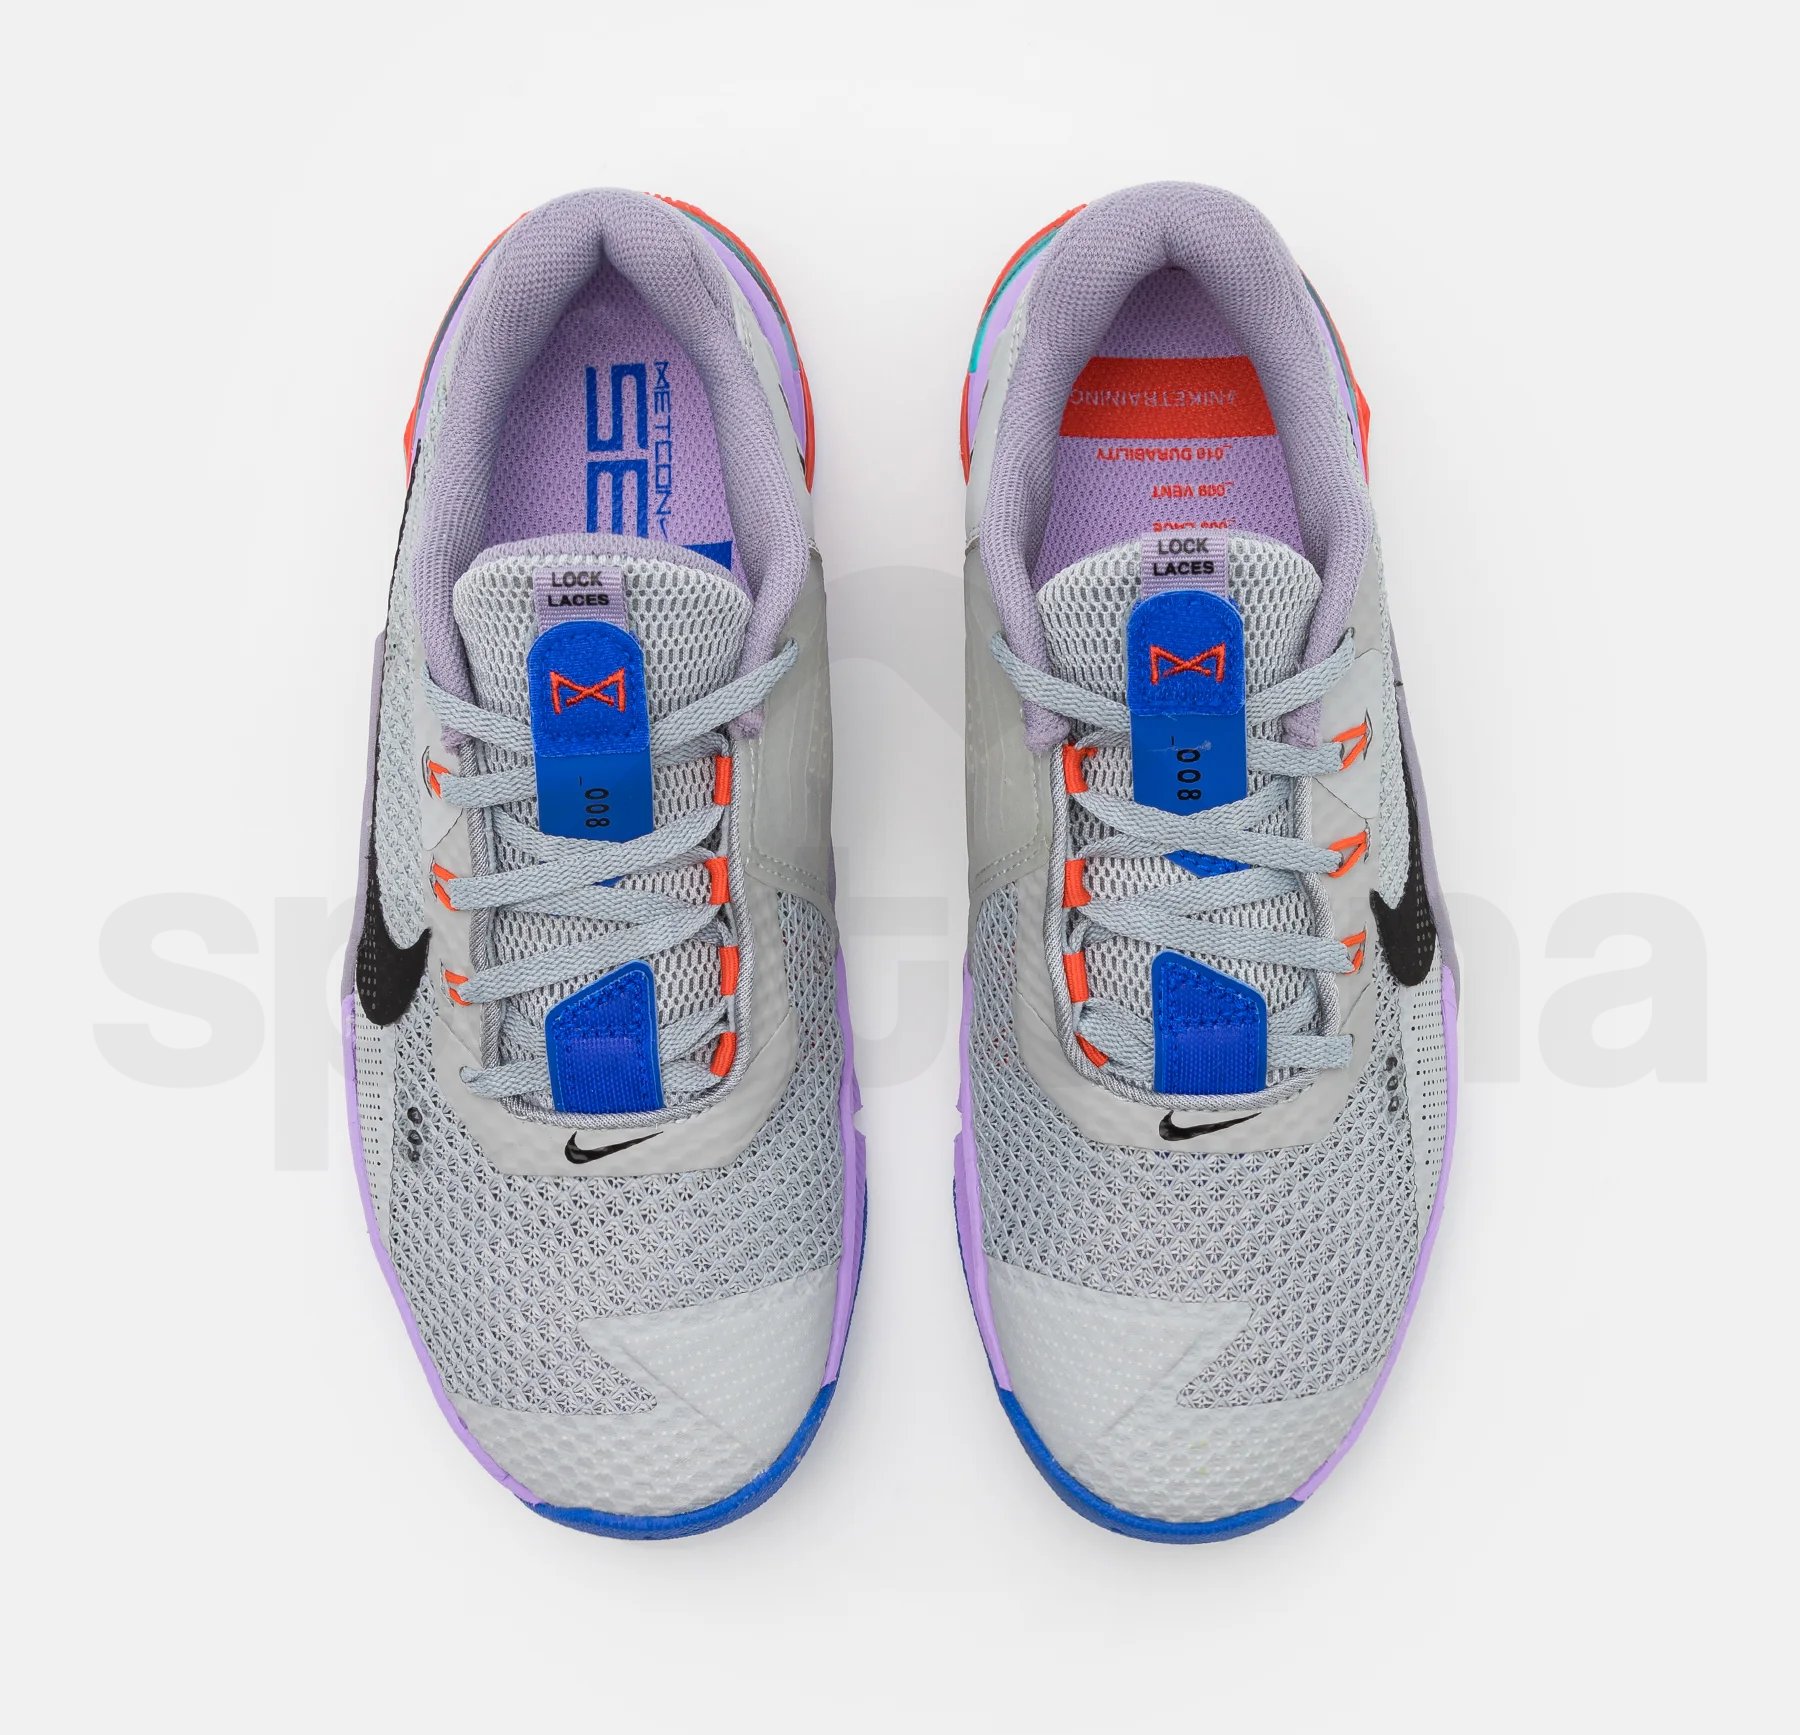 Obuv Nike Metcon 7 M - modrá